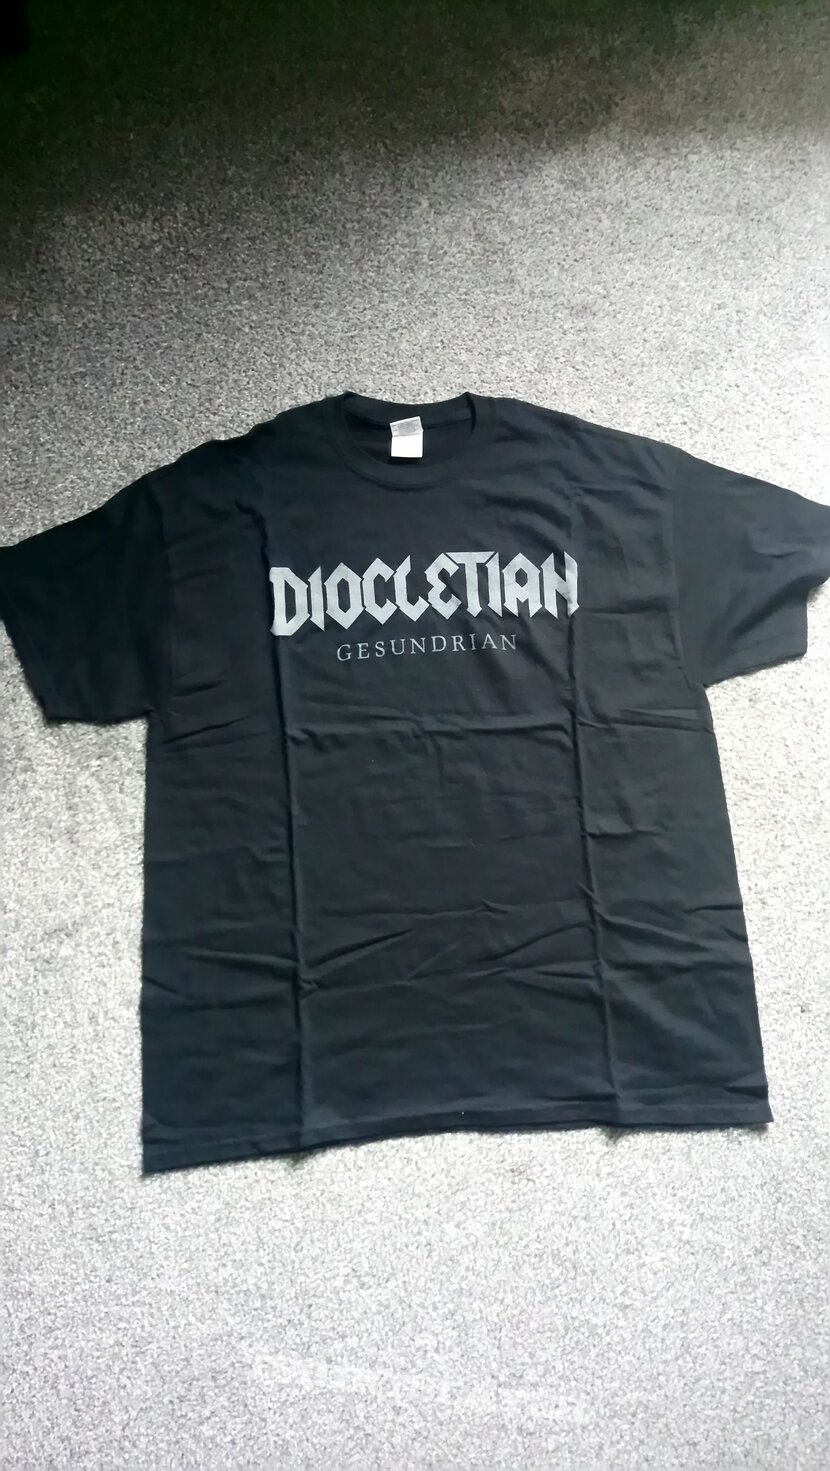 Diocletian - Gesundrian Shirt